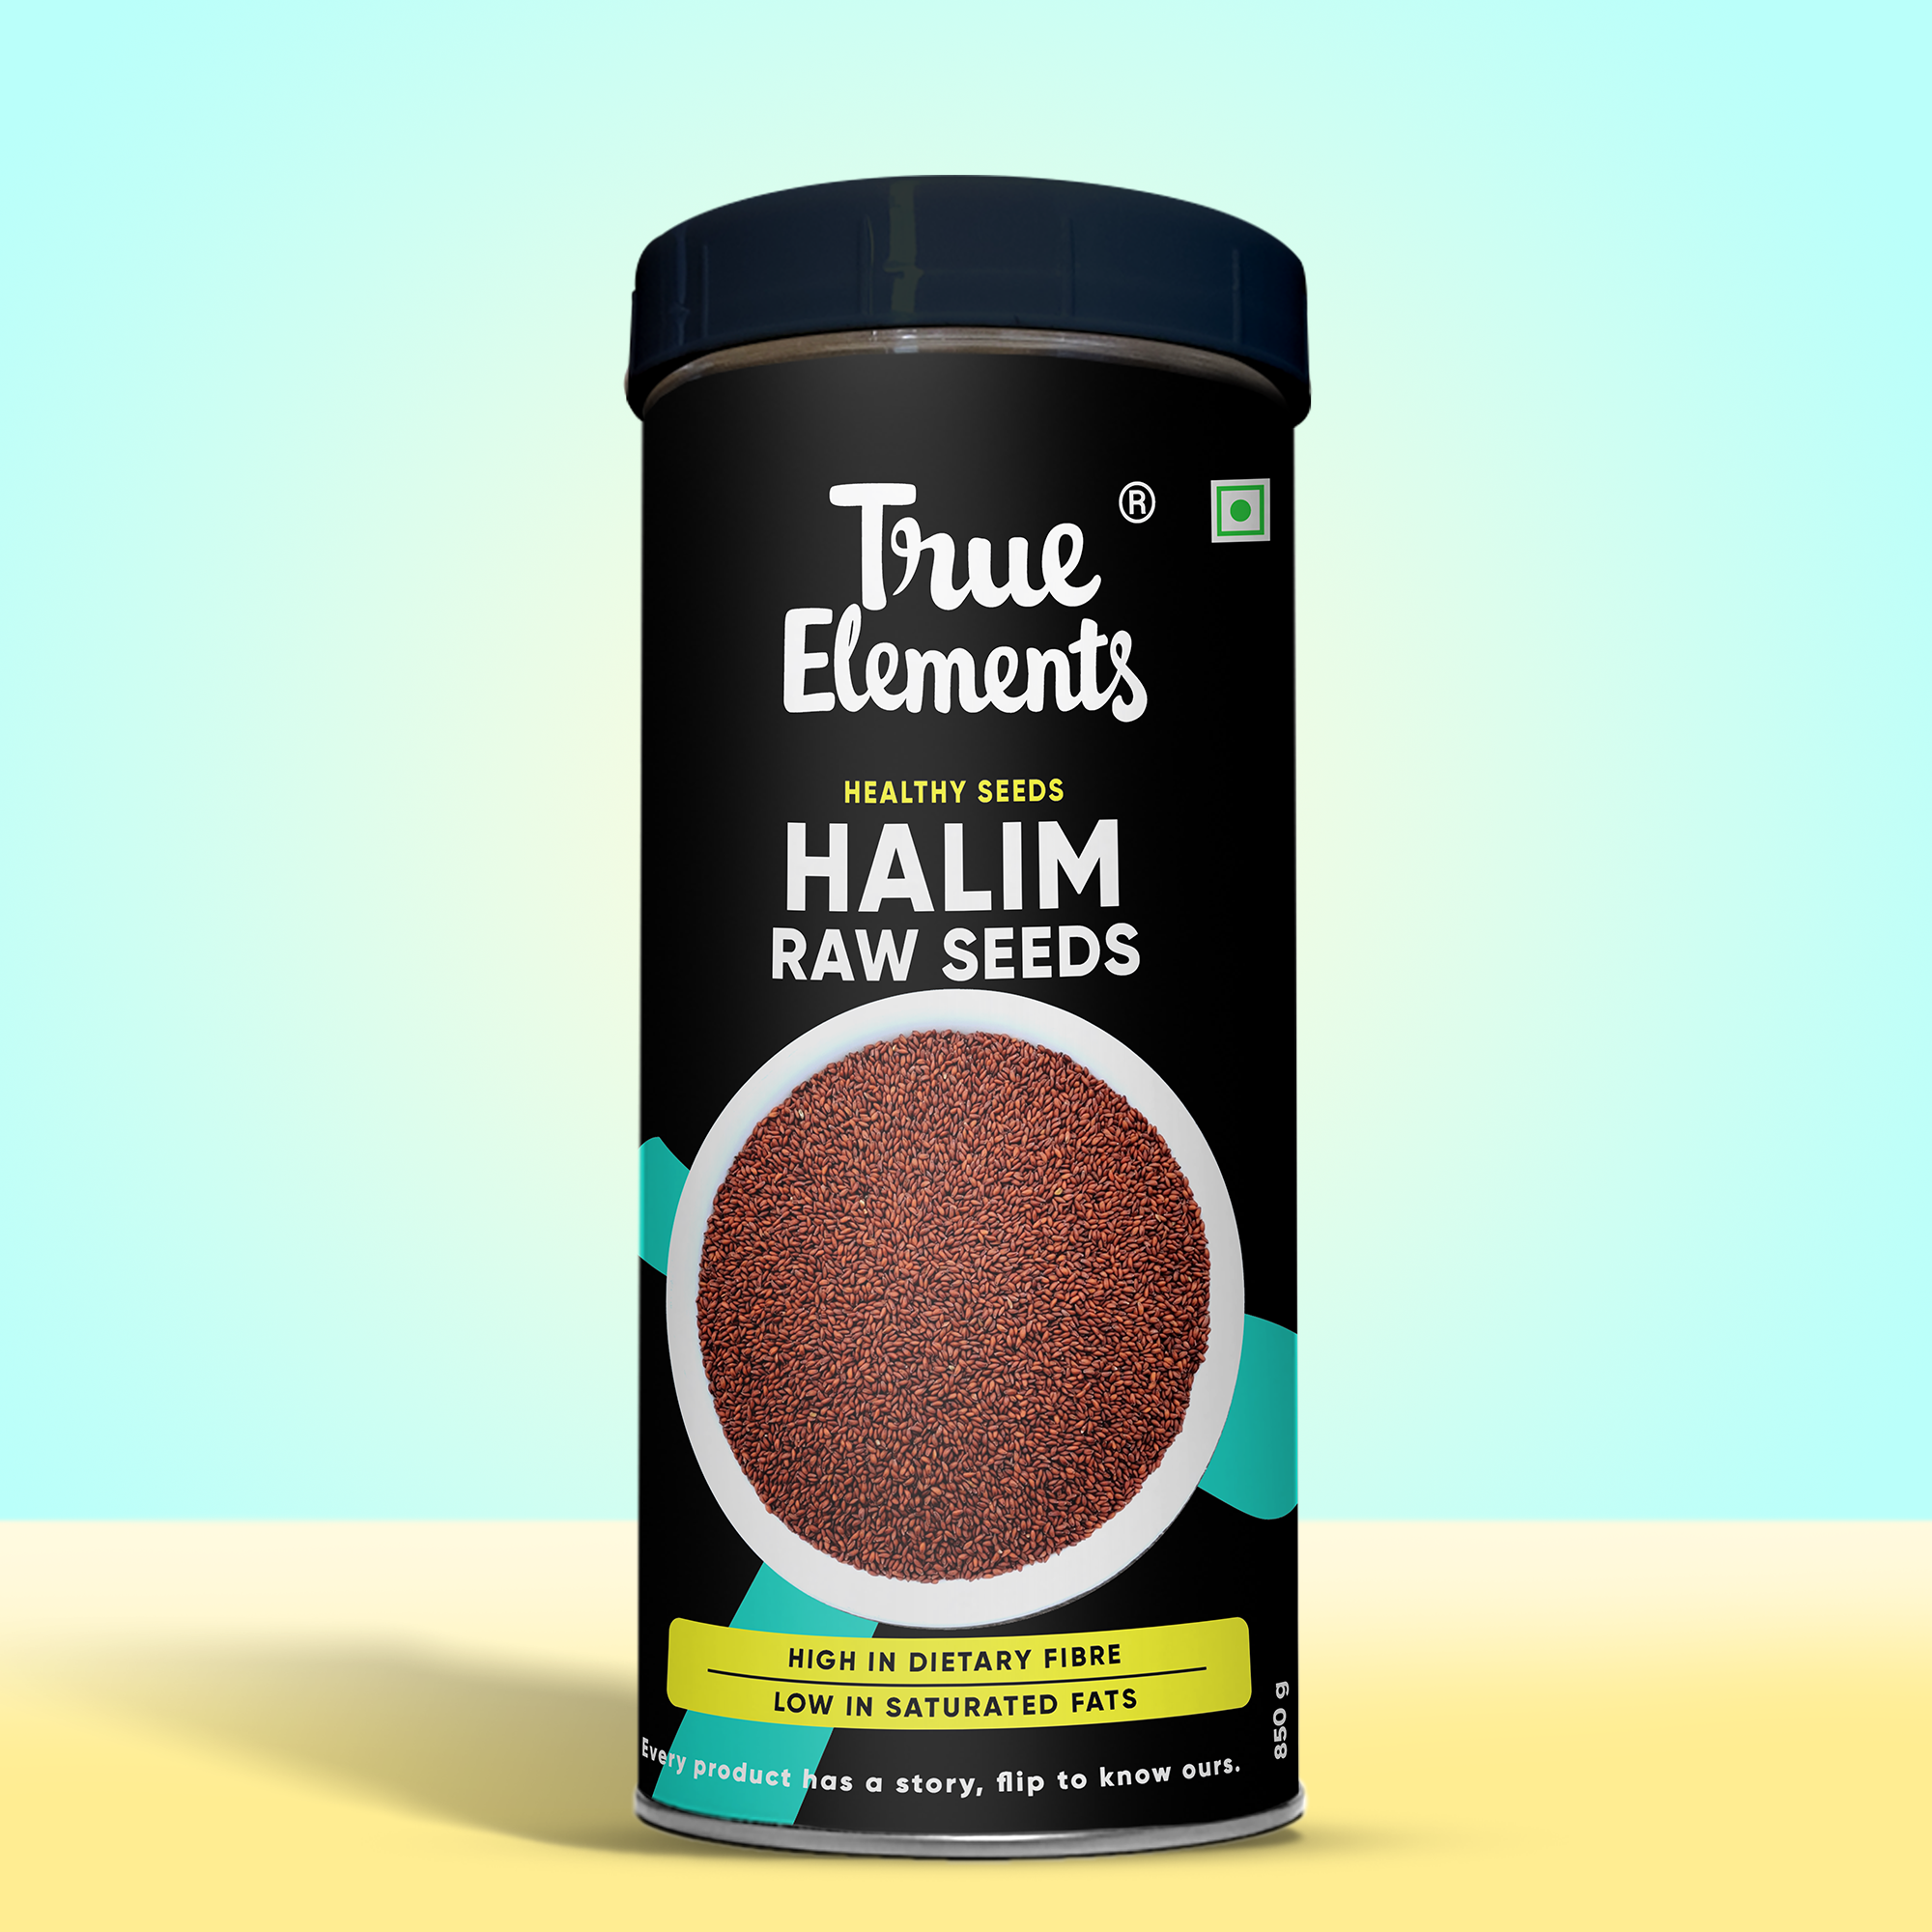 True elements raw halim seeds 850g Box (Premium Whole Seeds)